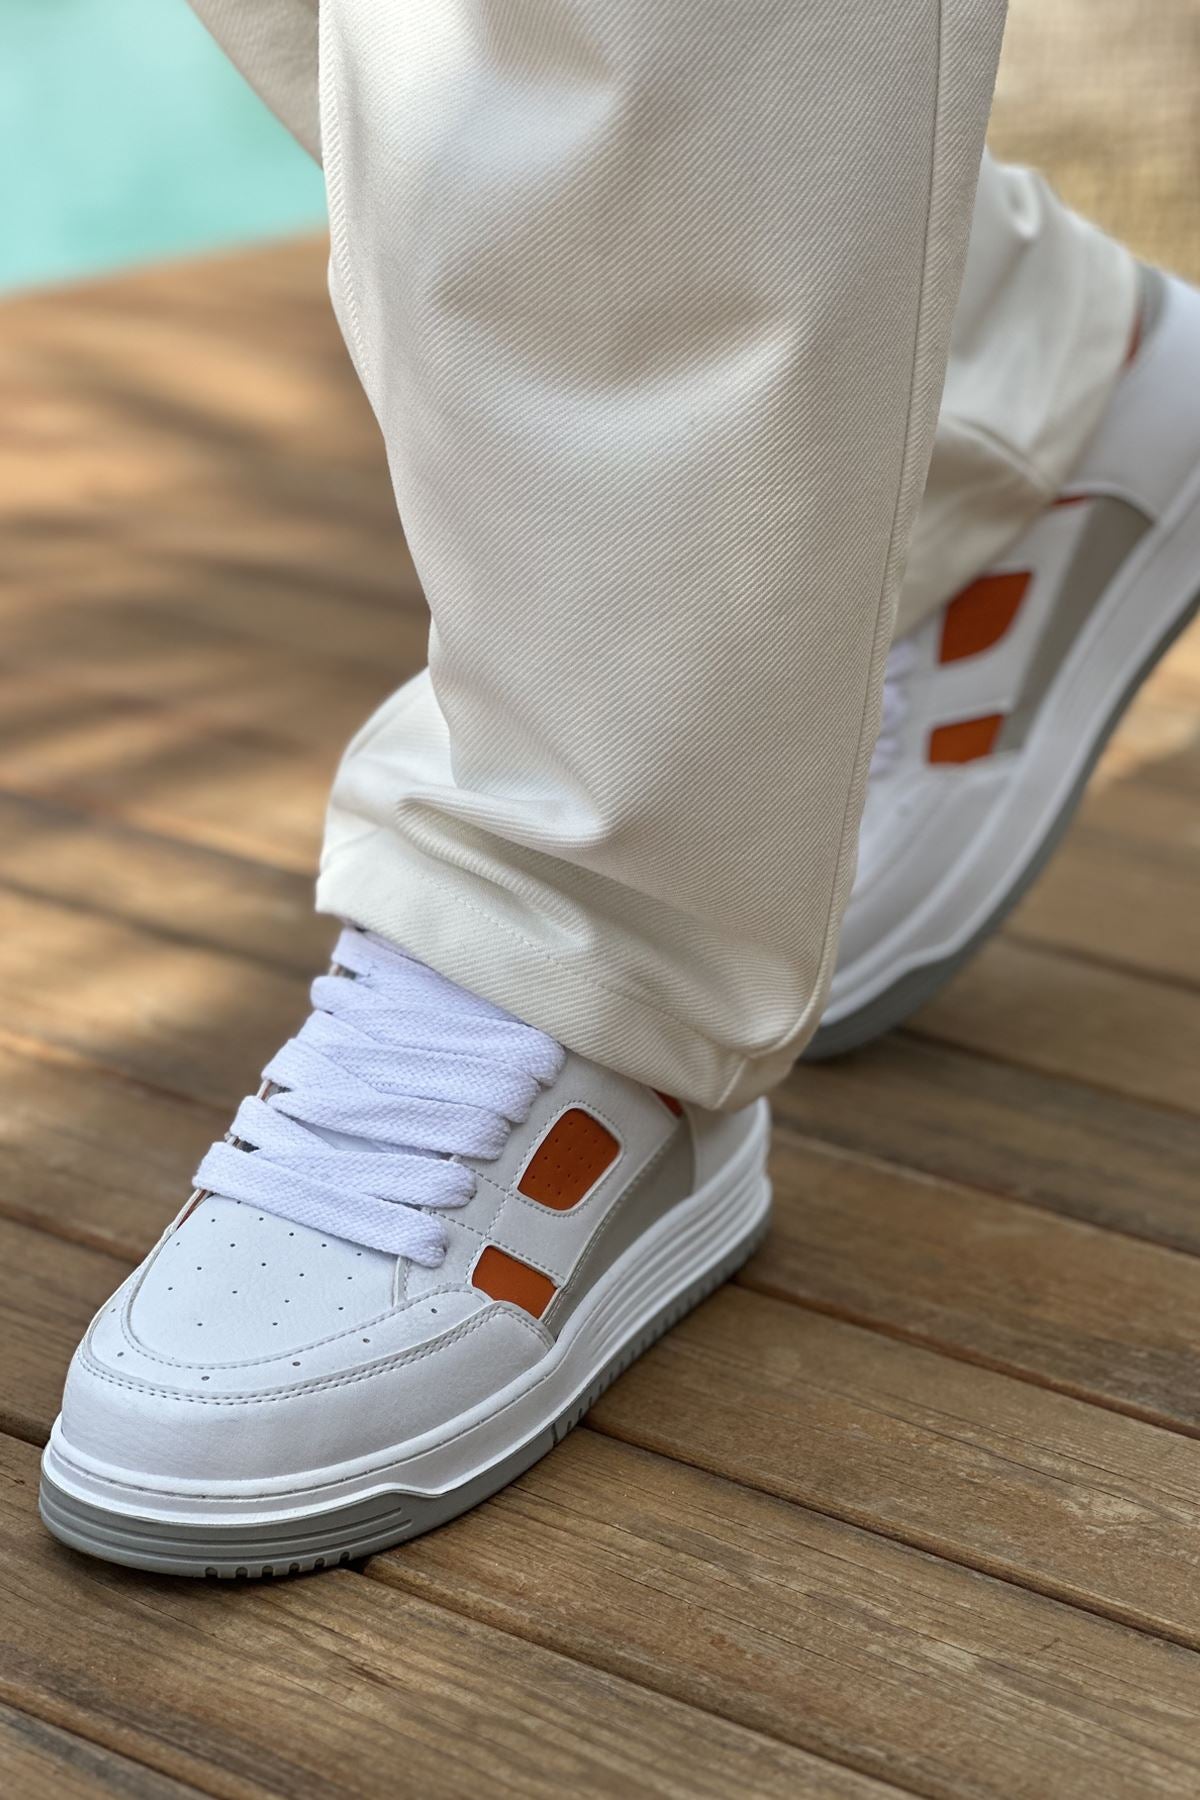 CH2410 CBT Avax Men's Sports Shoes White/Orange - STREETMODE ™